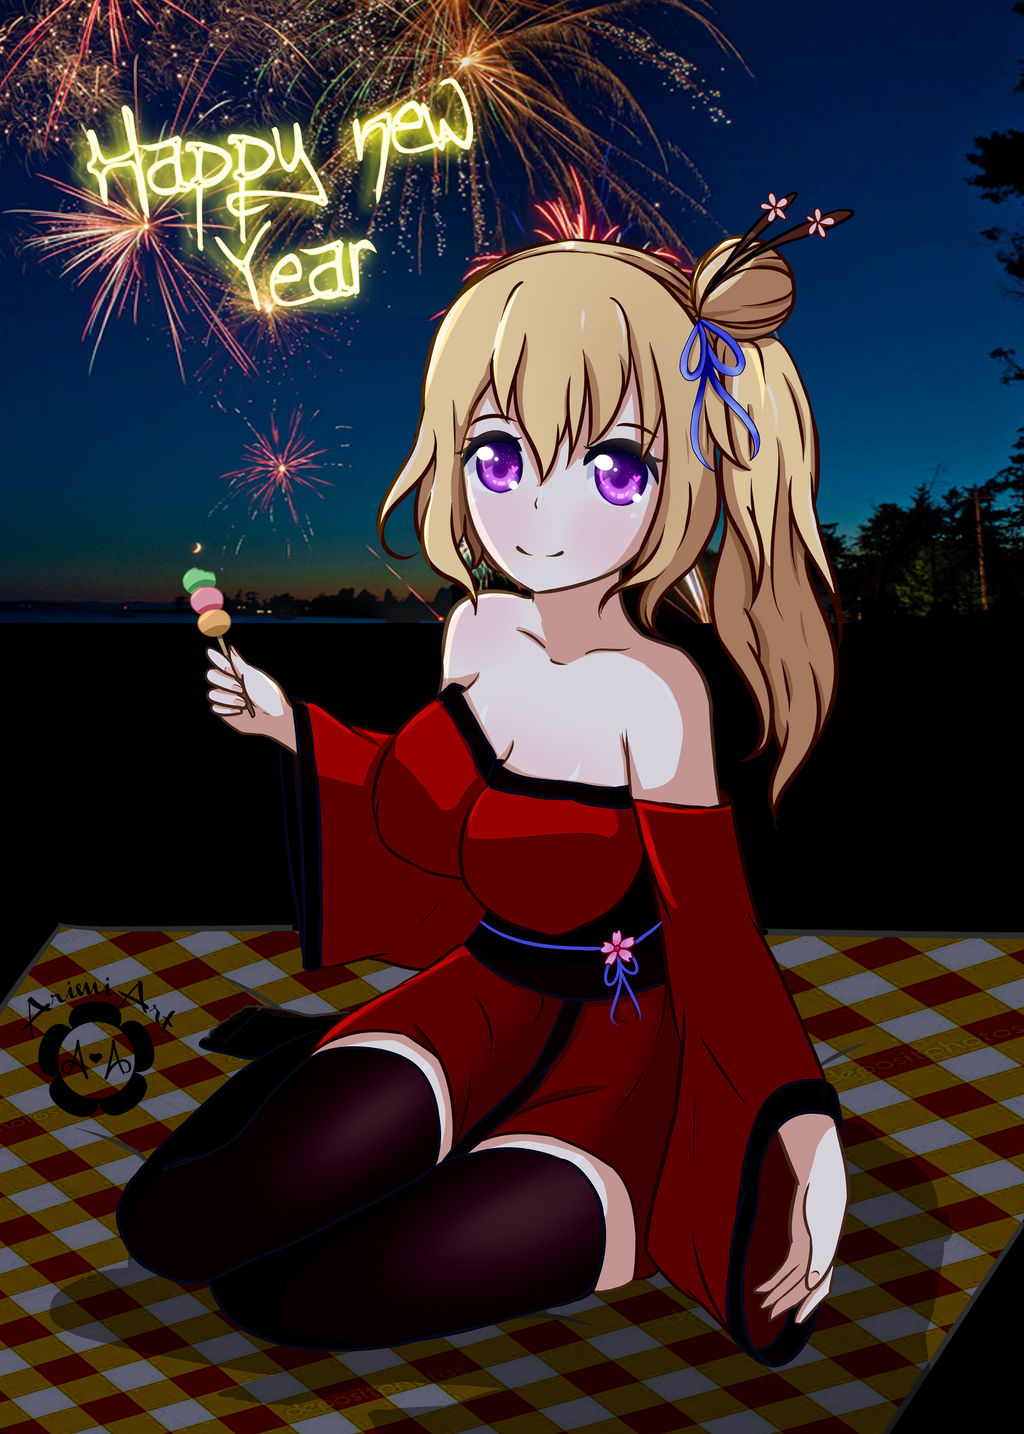 Happy new year anime girl by Arimi-Art on DeviantArt